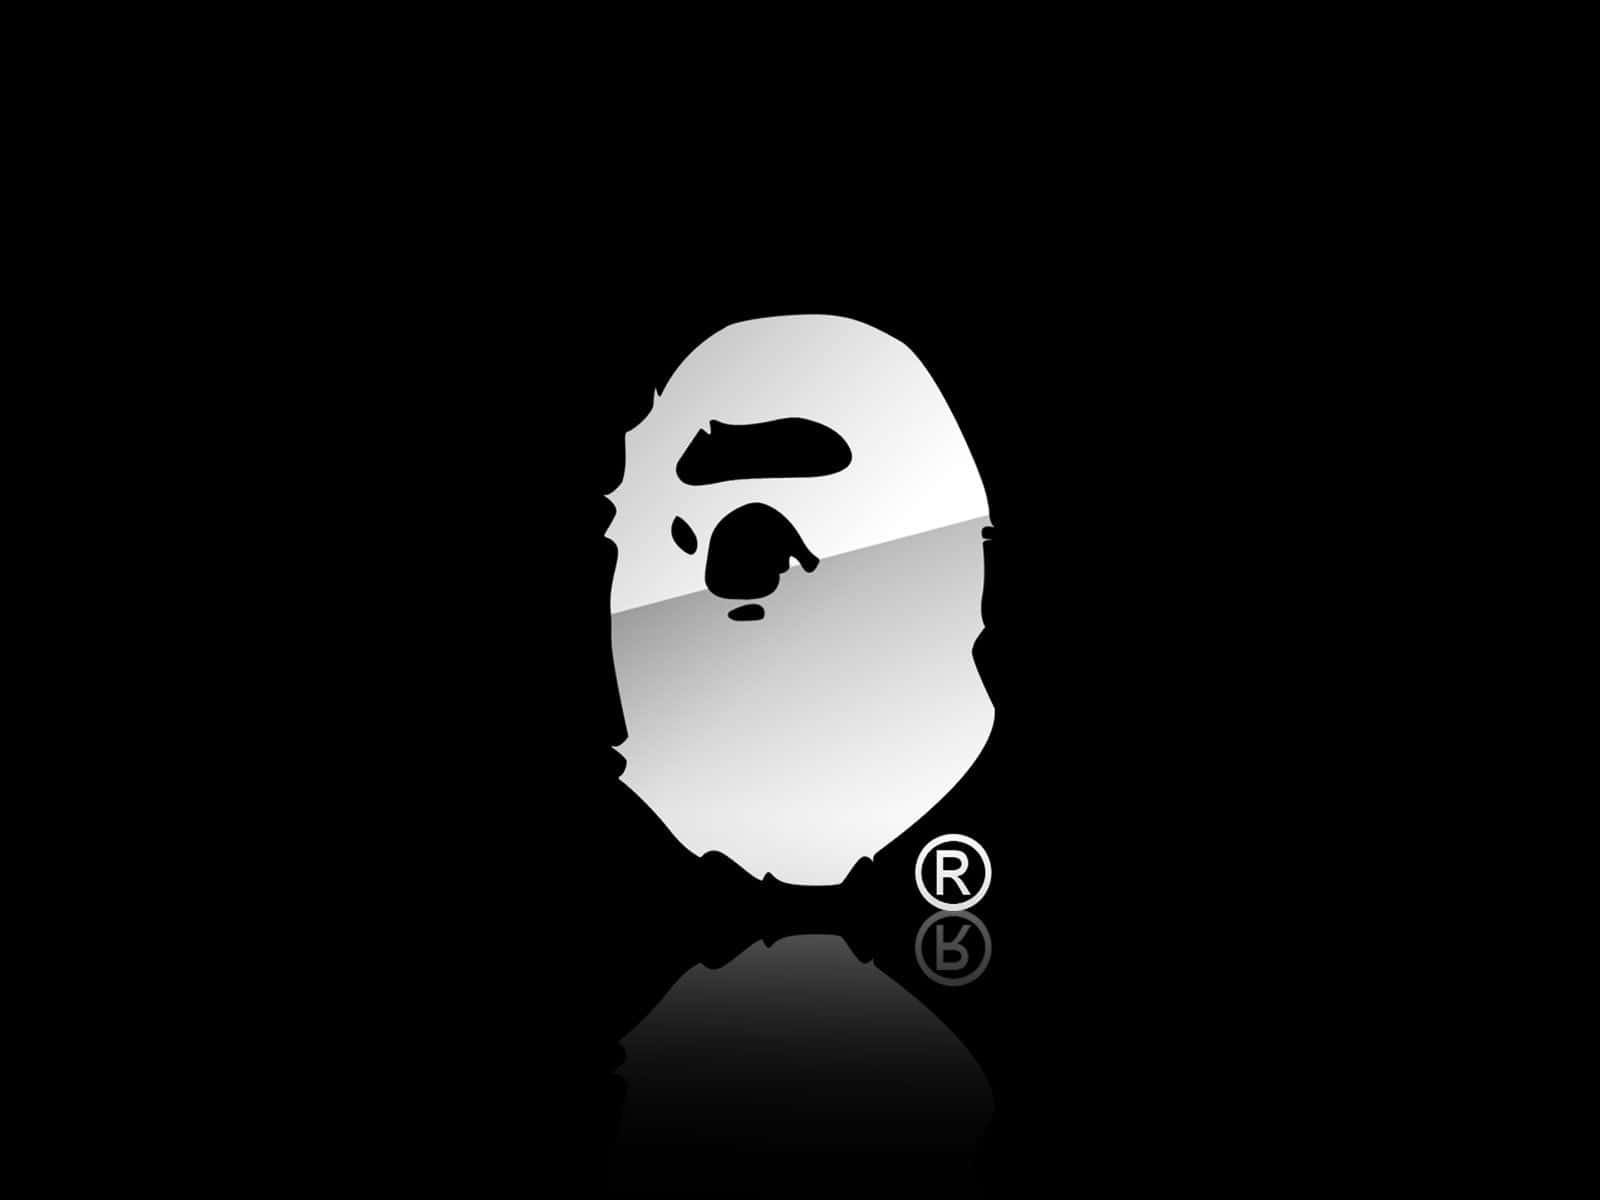 a bathing ape logo on a black background